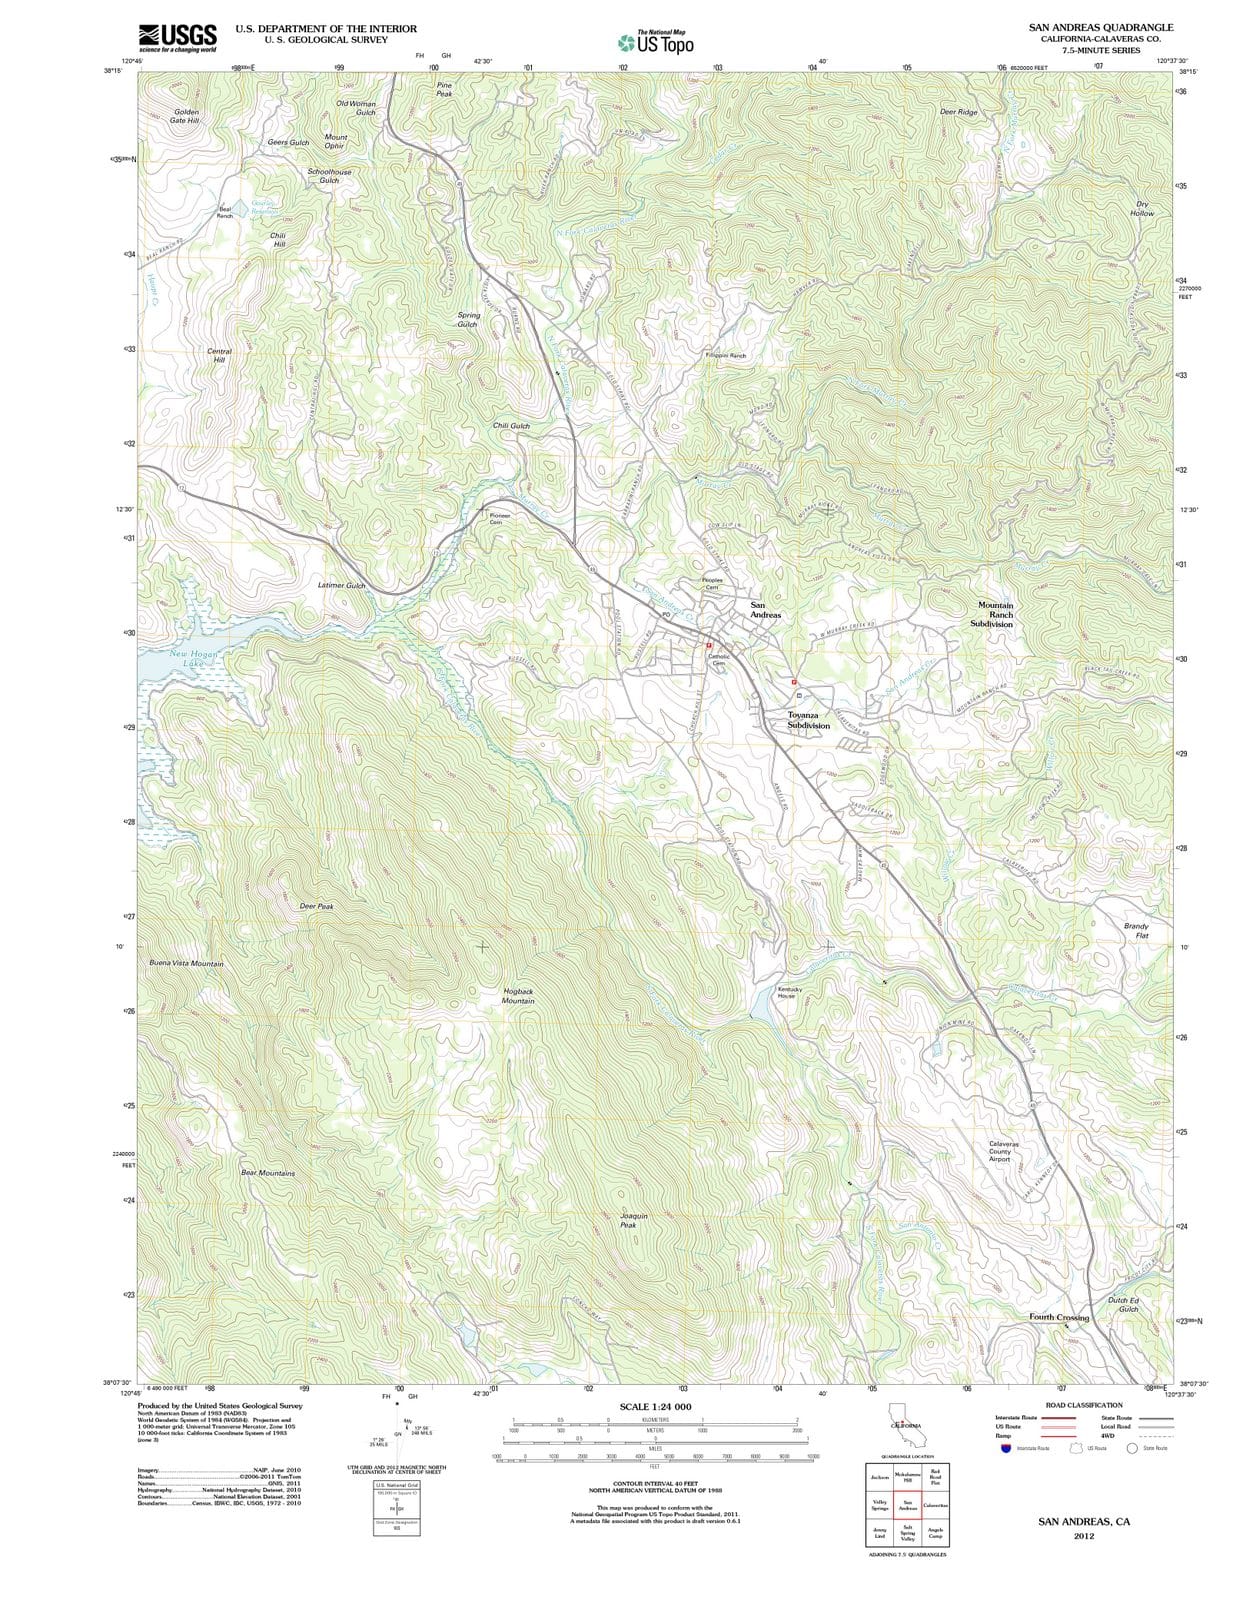 2012 San Andreas, CA - California - USGS Topographic Map